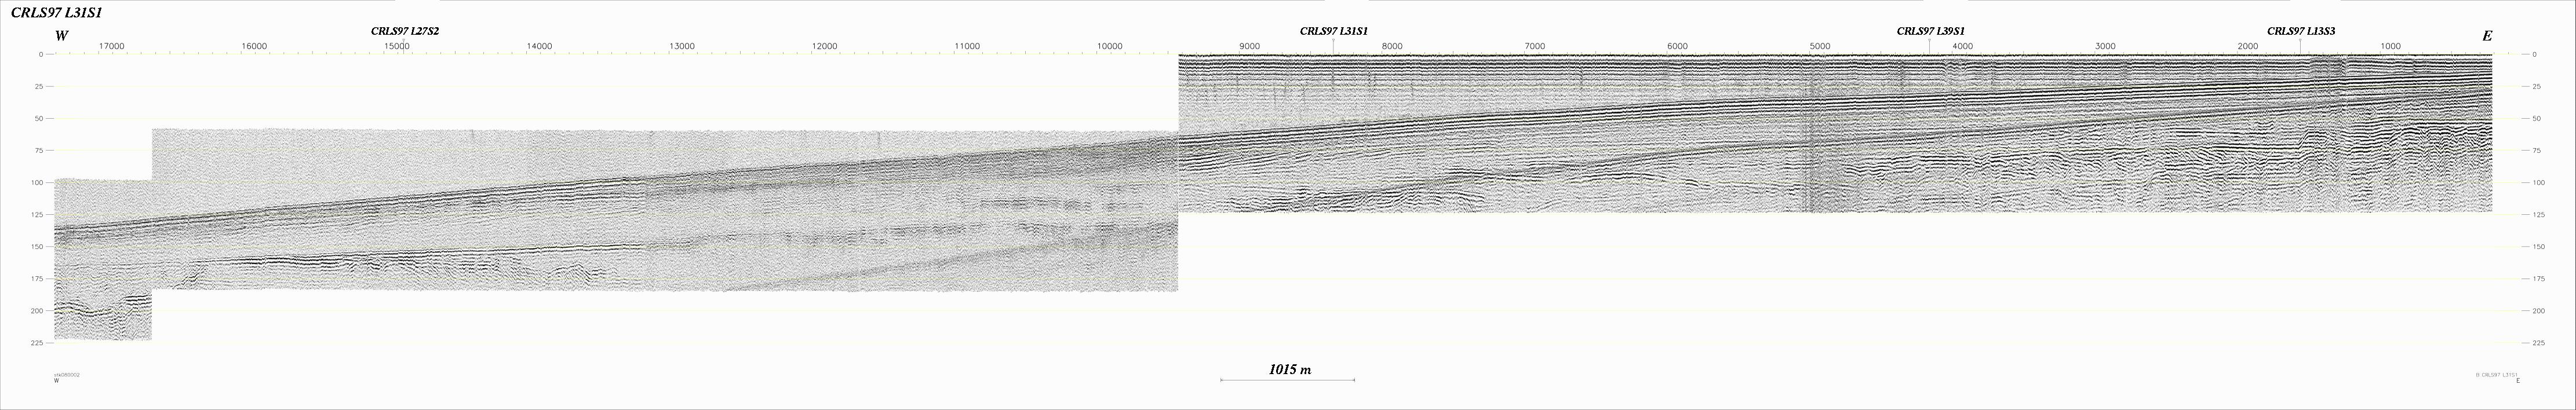 Seismic Reflection Profile Line No.: L31s1 (583741 bytes)